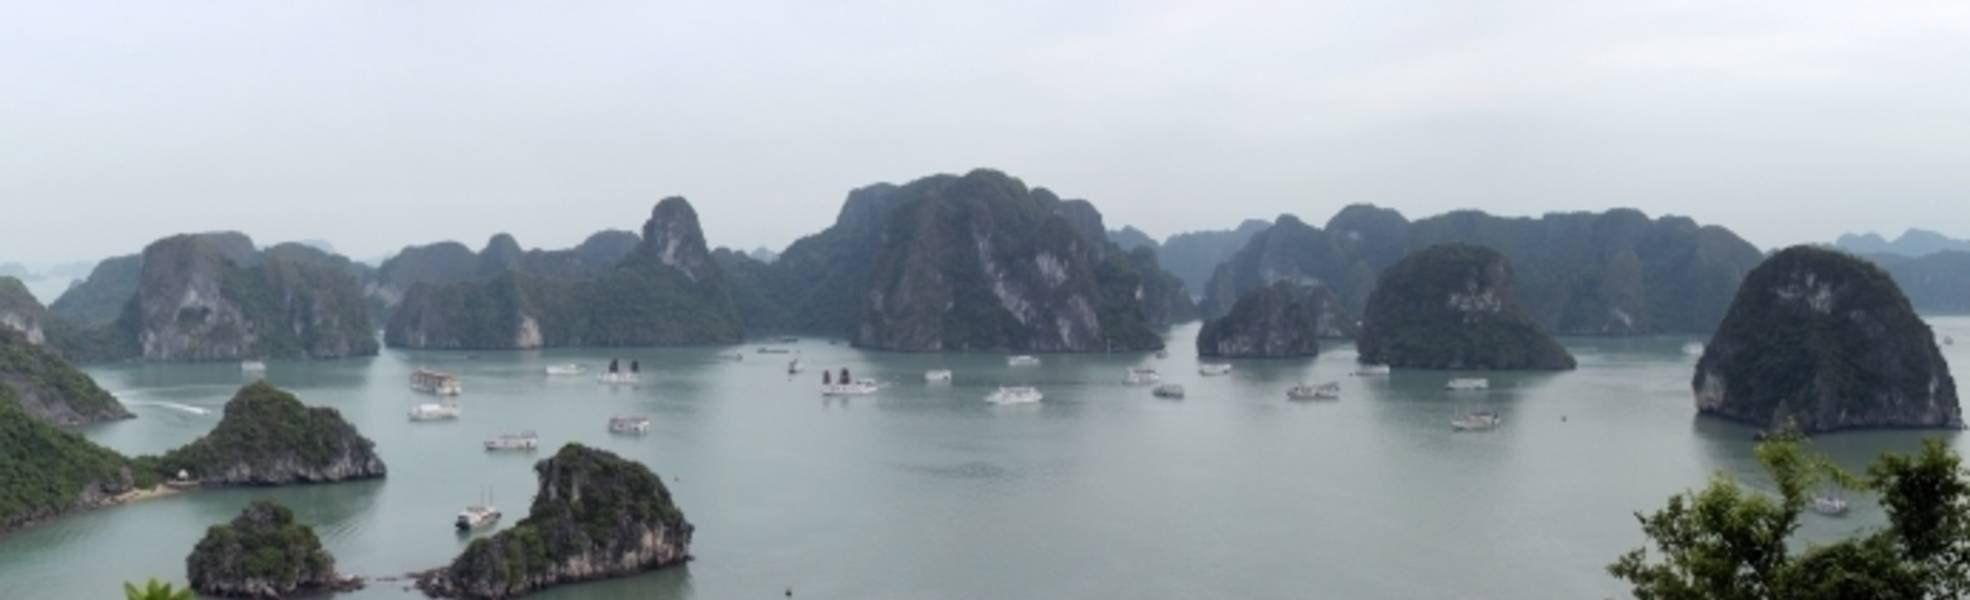 Entdecke faszinierende Landschaften in Vietnam bei Adventure & Trips